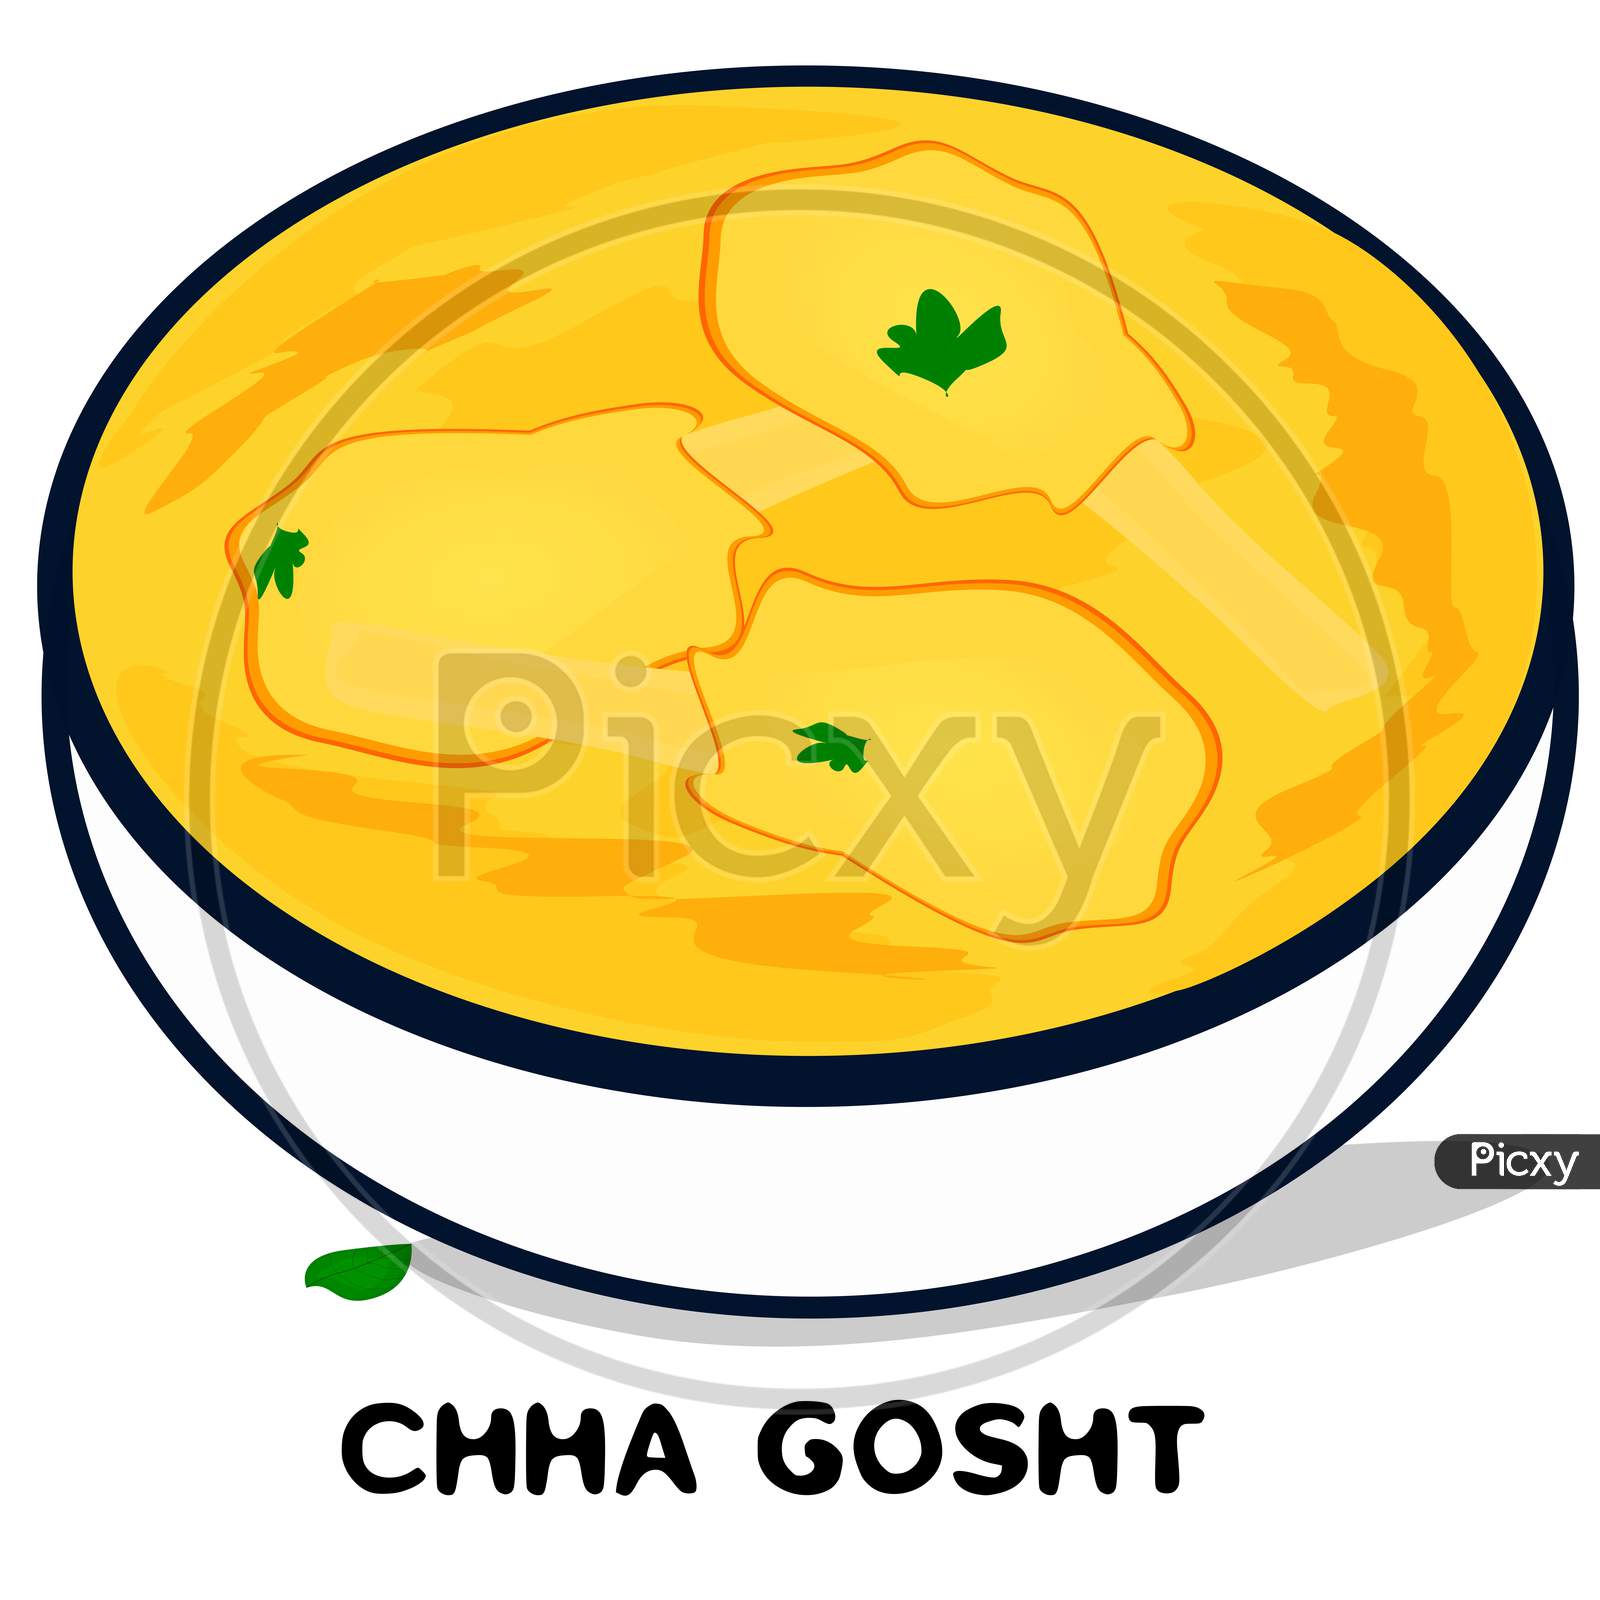 Chha gosht Himachal pradesh Food Vector